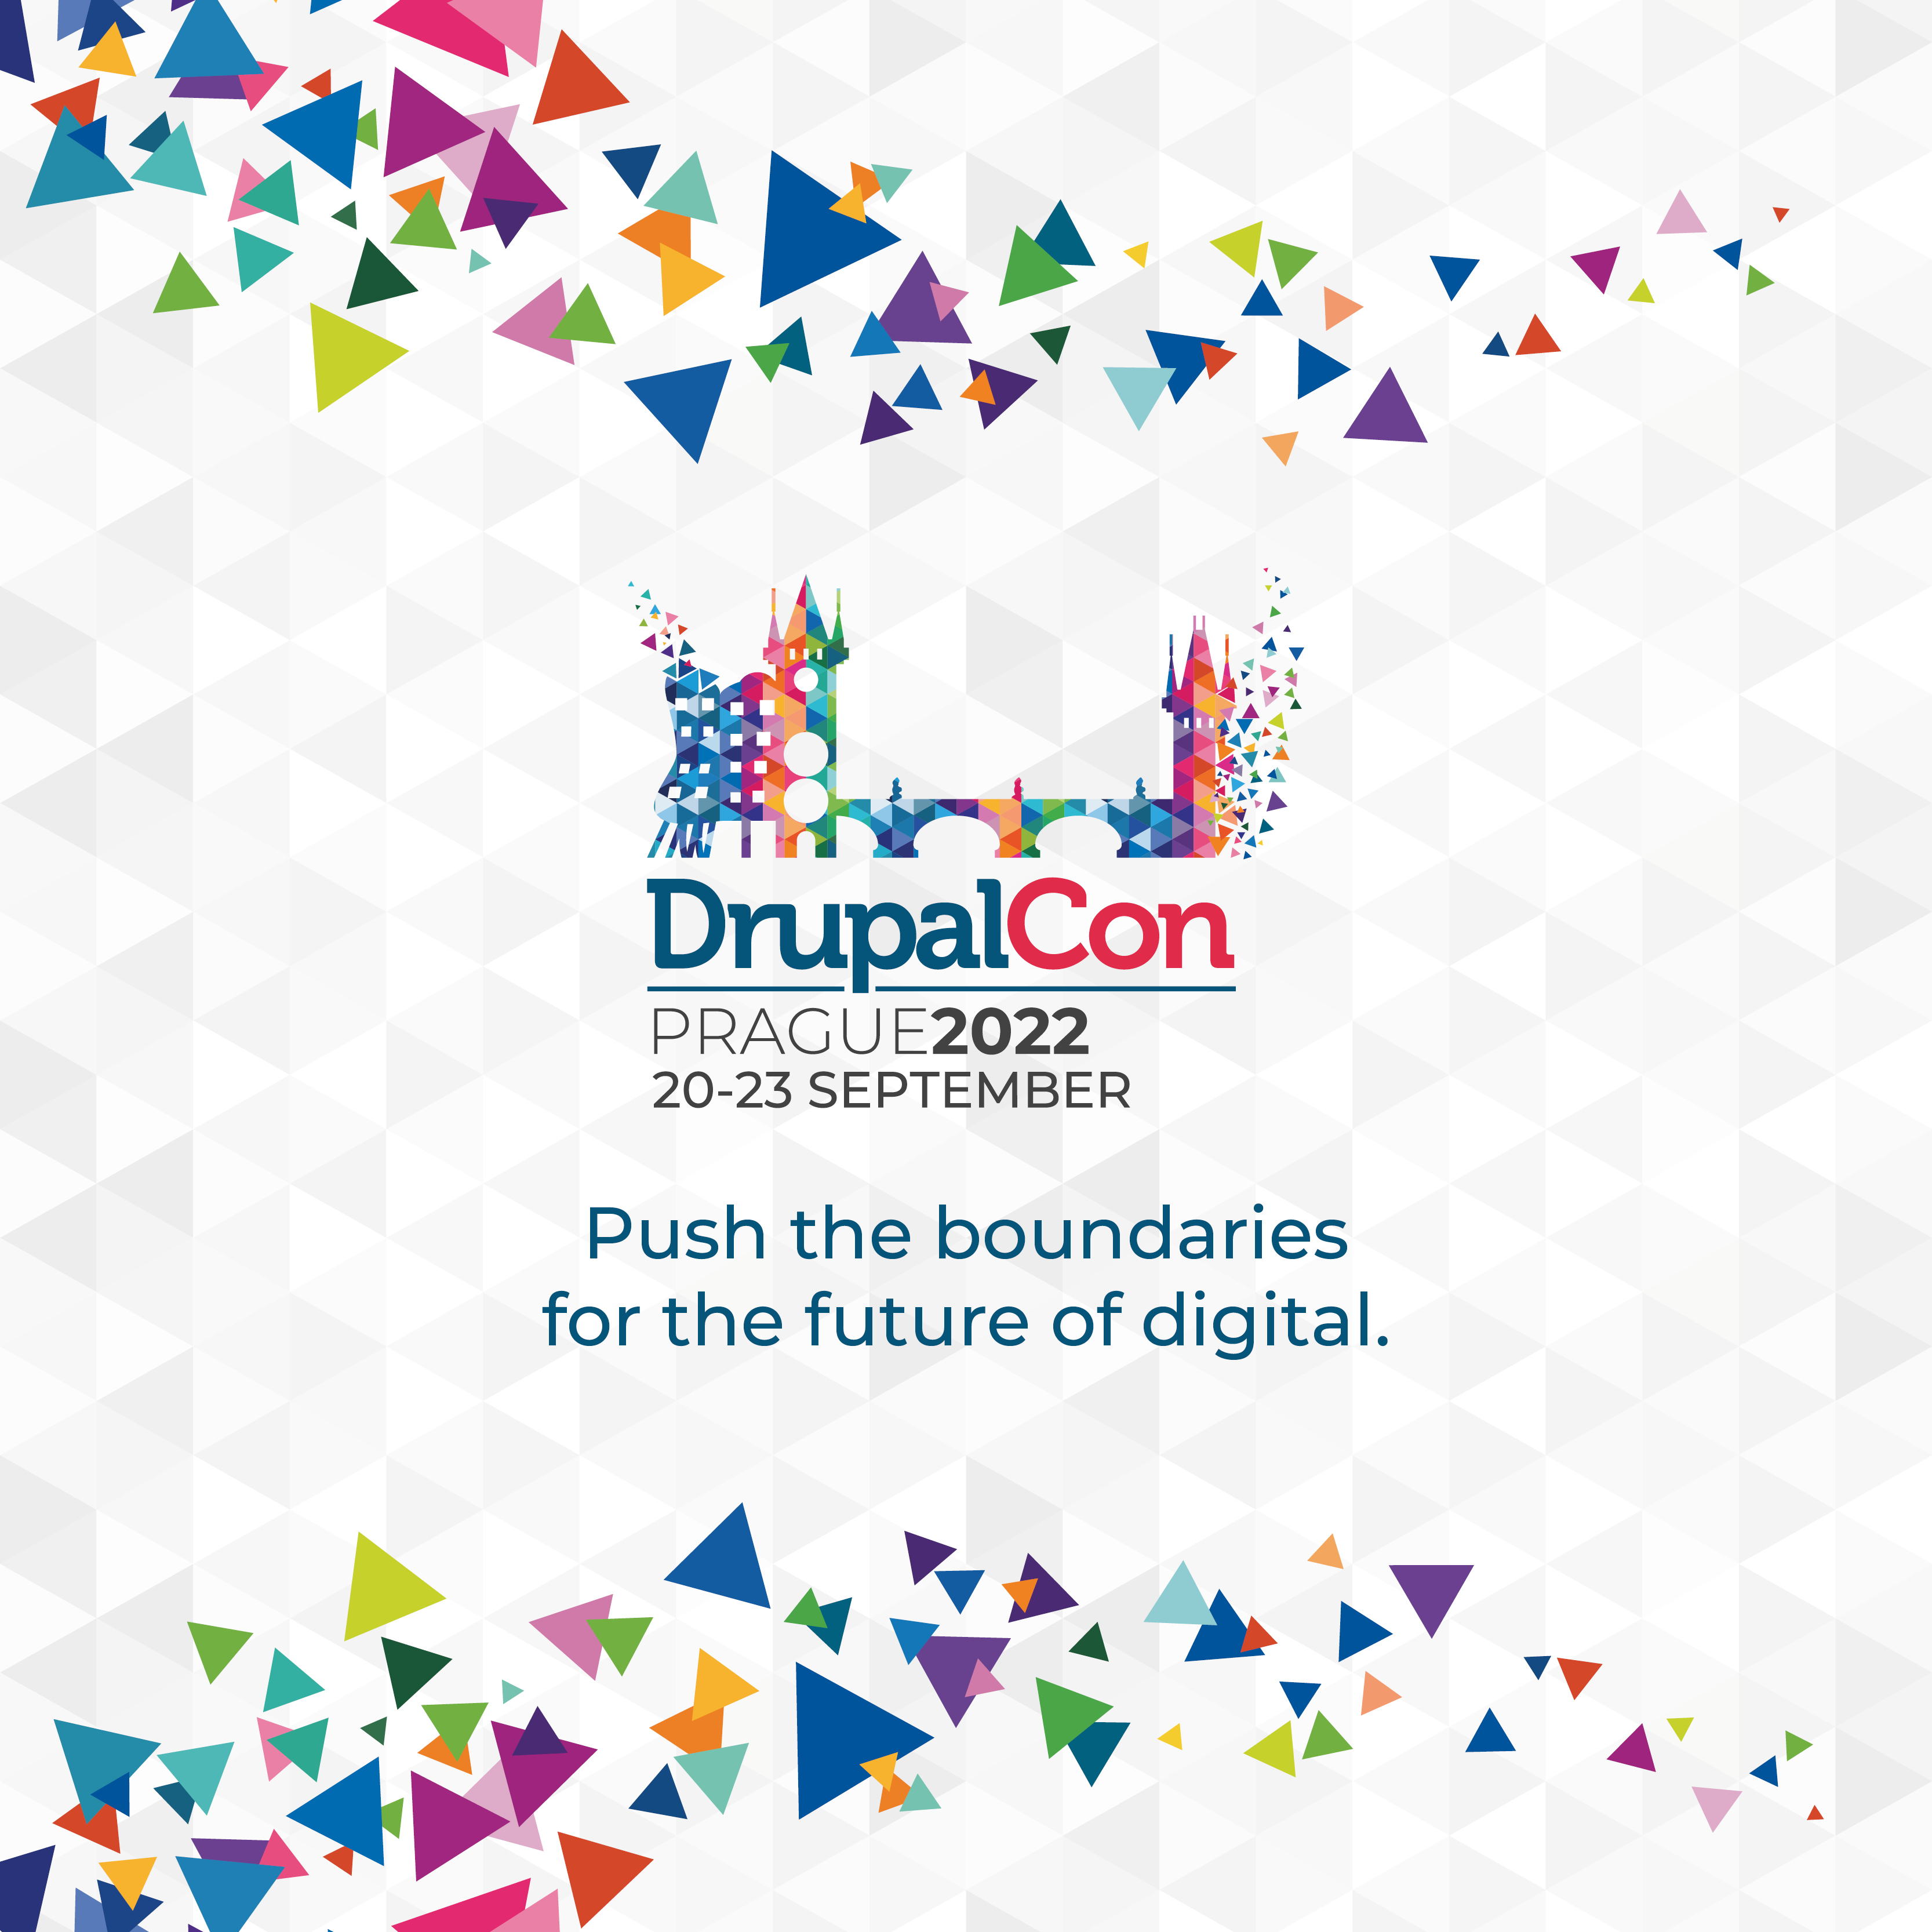 Srijan Participates in DrupalCon Prague 2022 as a Sponsor, Presenter, & Attendee